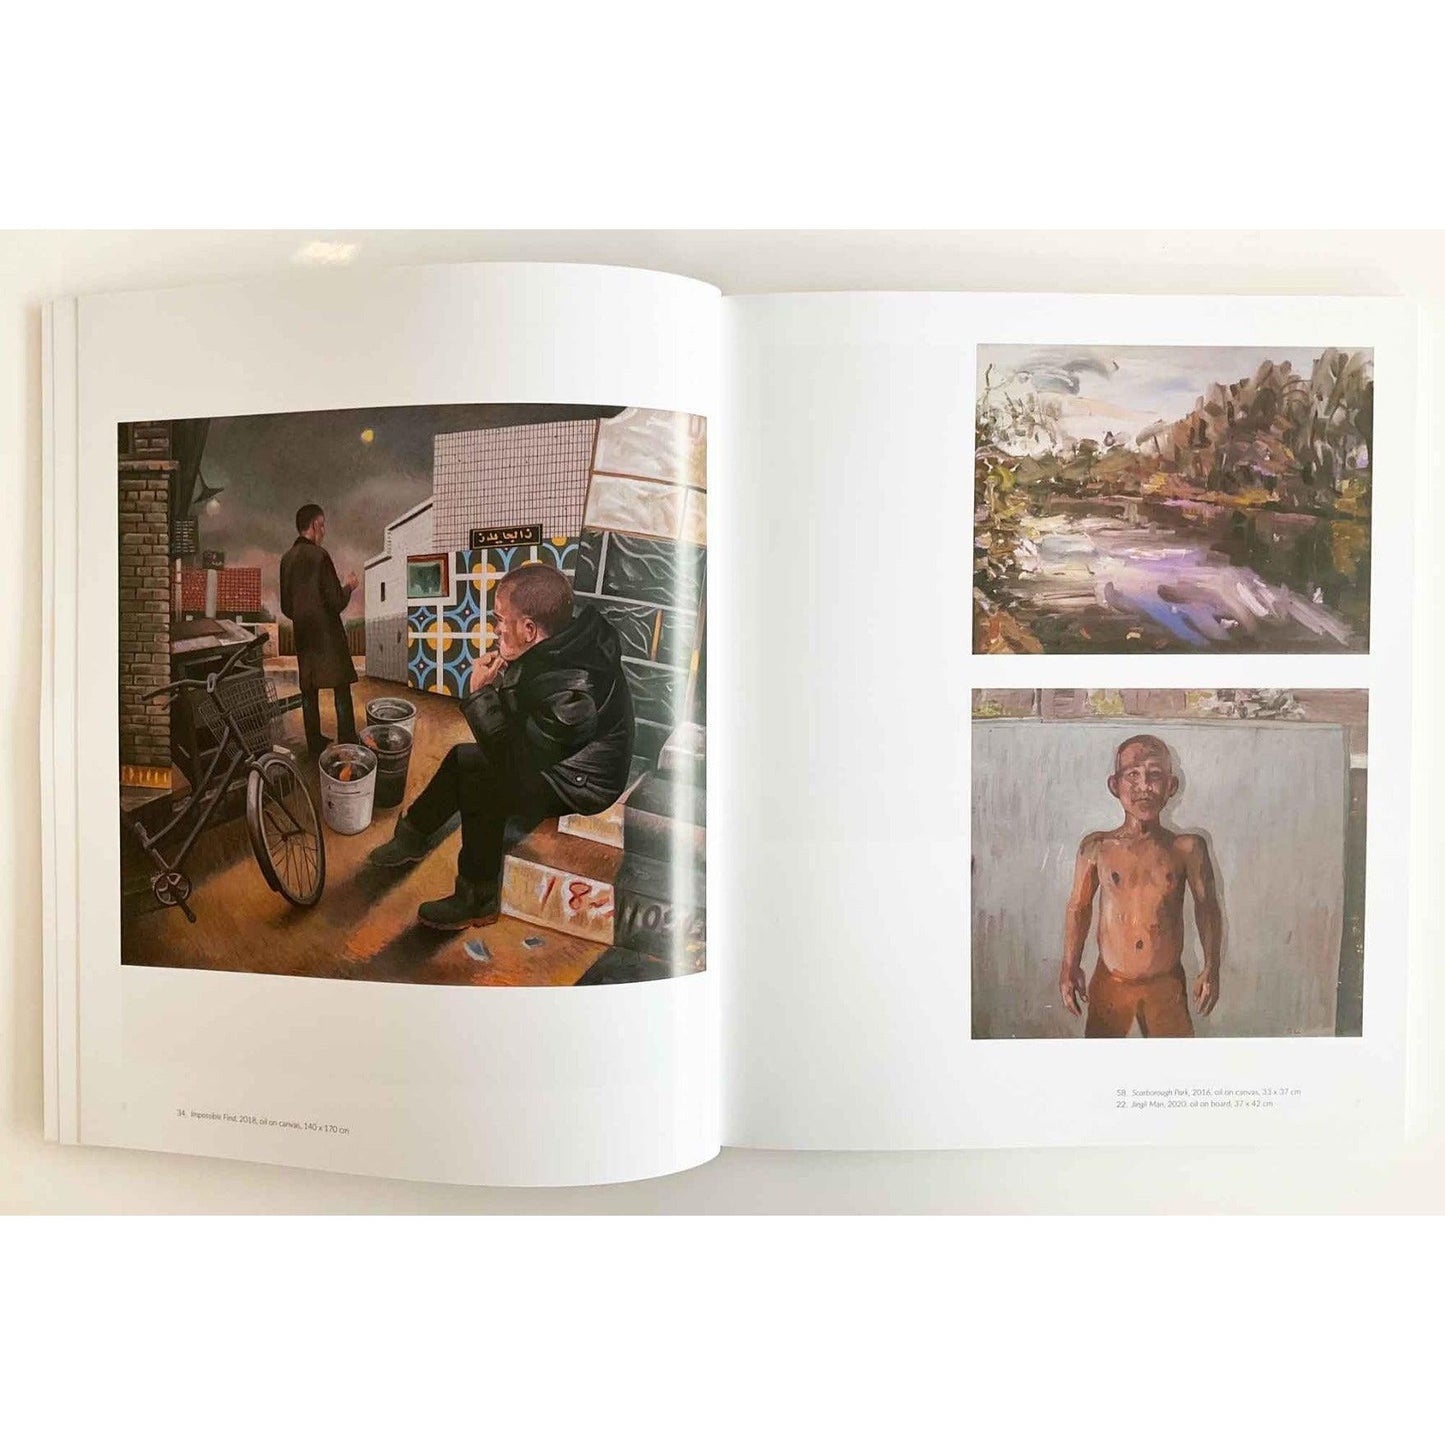 Steve Lopes 'Encountered' Catalogue - Mitchell Fine Art